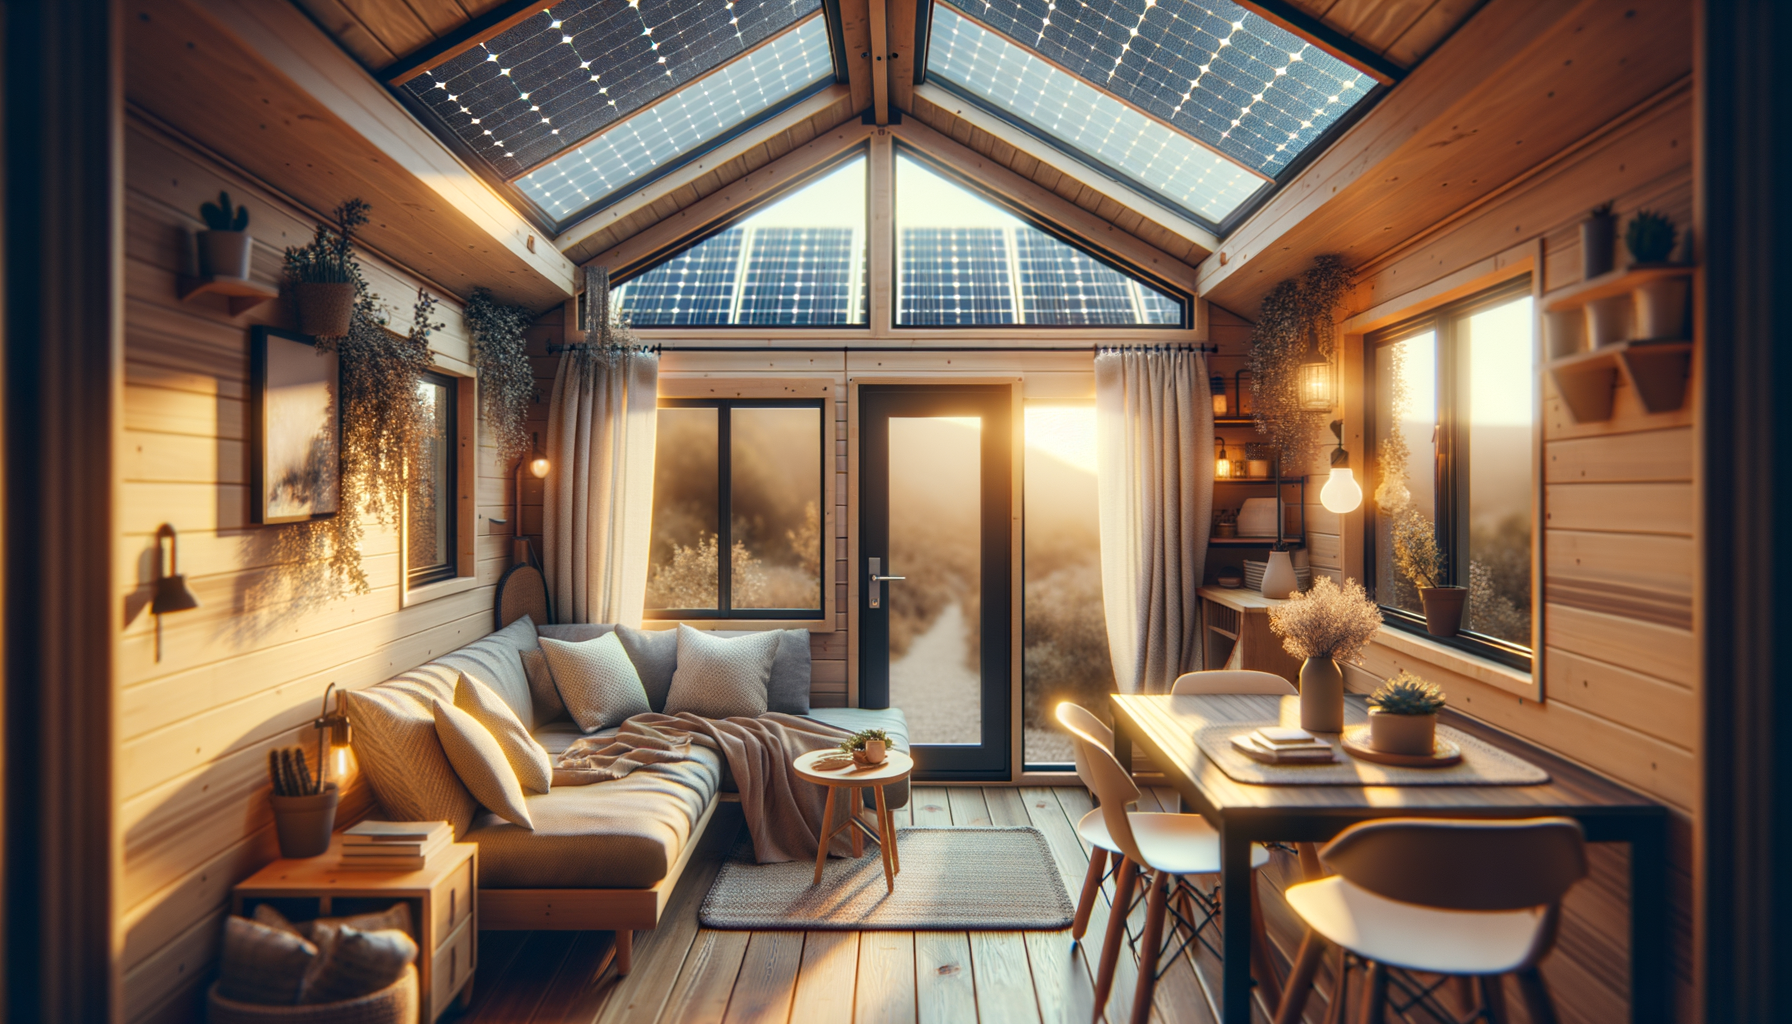 ALT: Energy-efficient tiny house interior